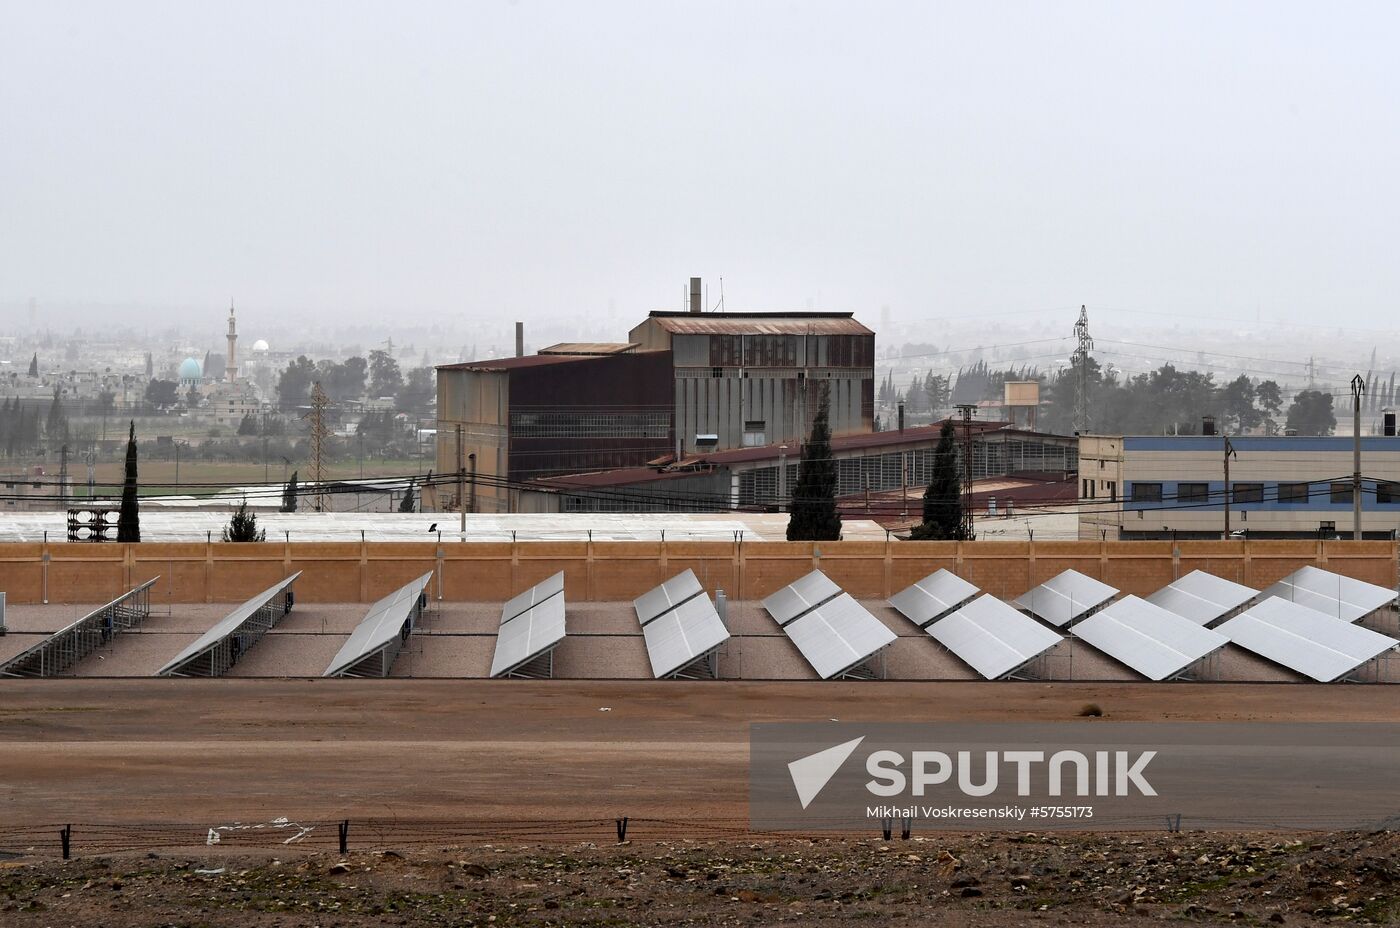 Syria Solar Power Plant